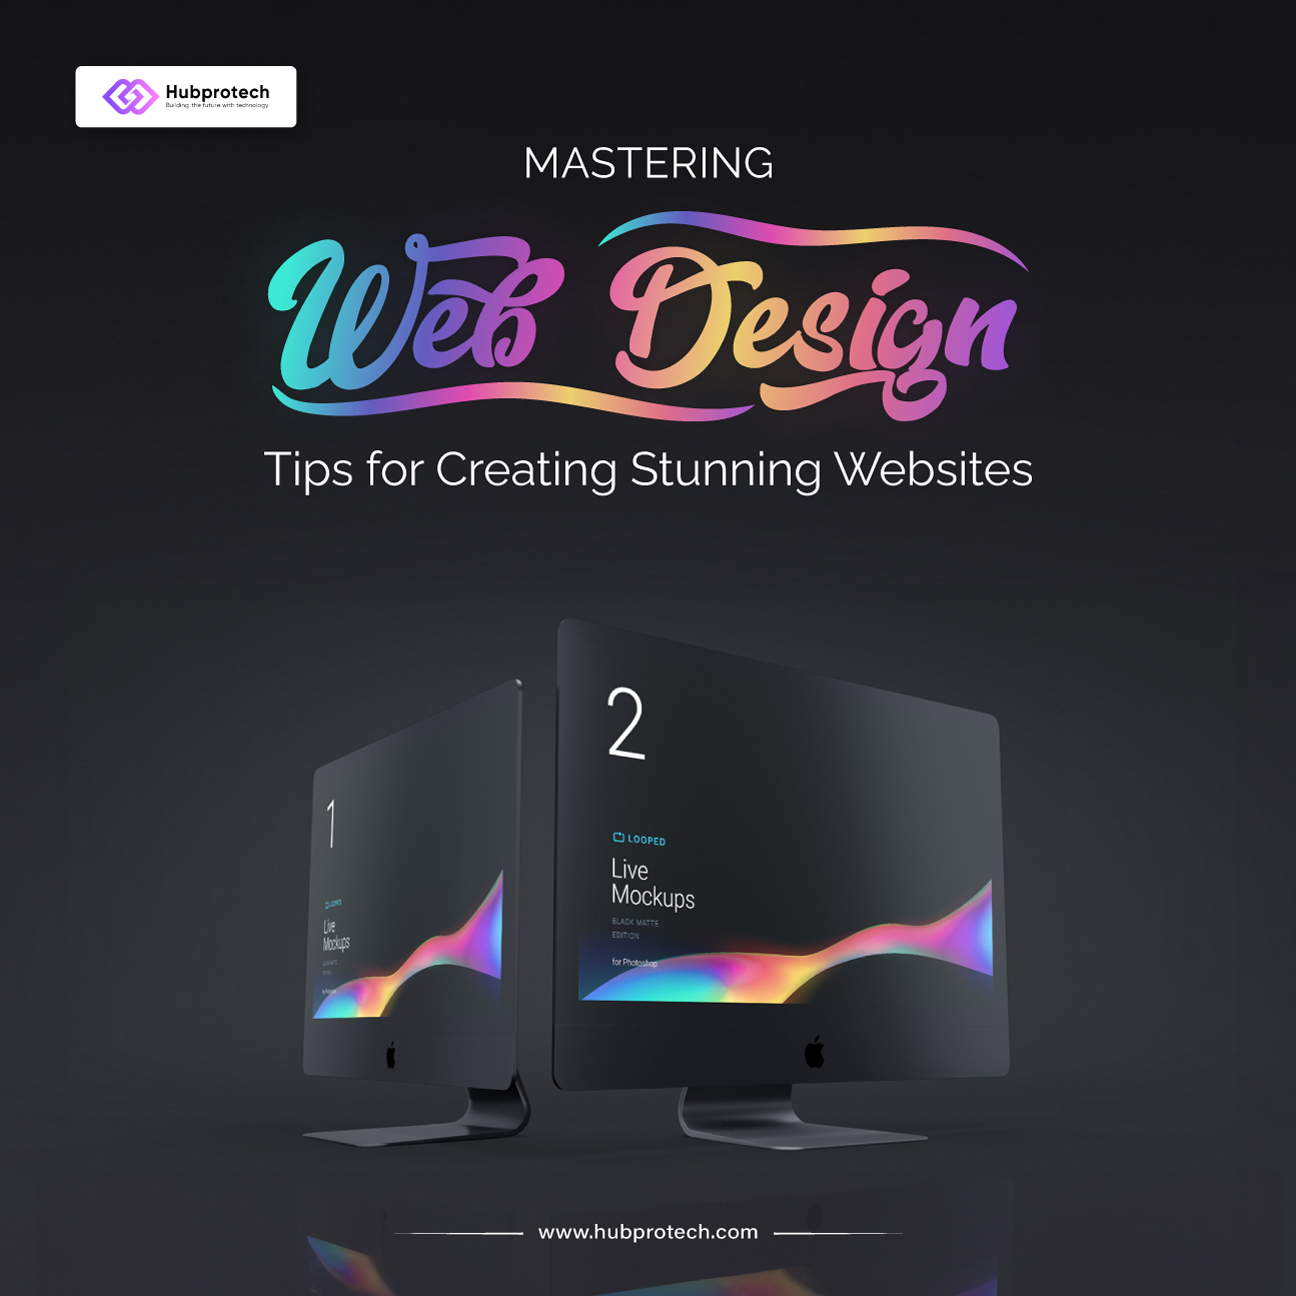 Hubprotech sharing tips for mastering web design and designing stunning websites.